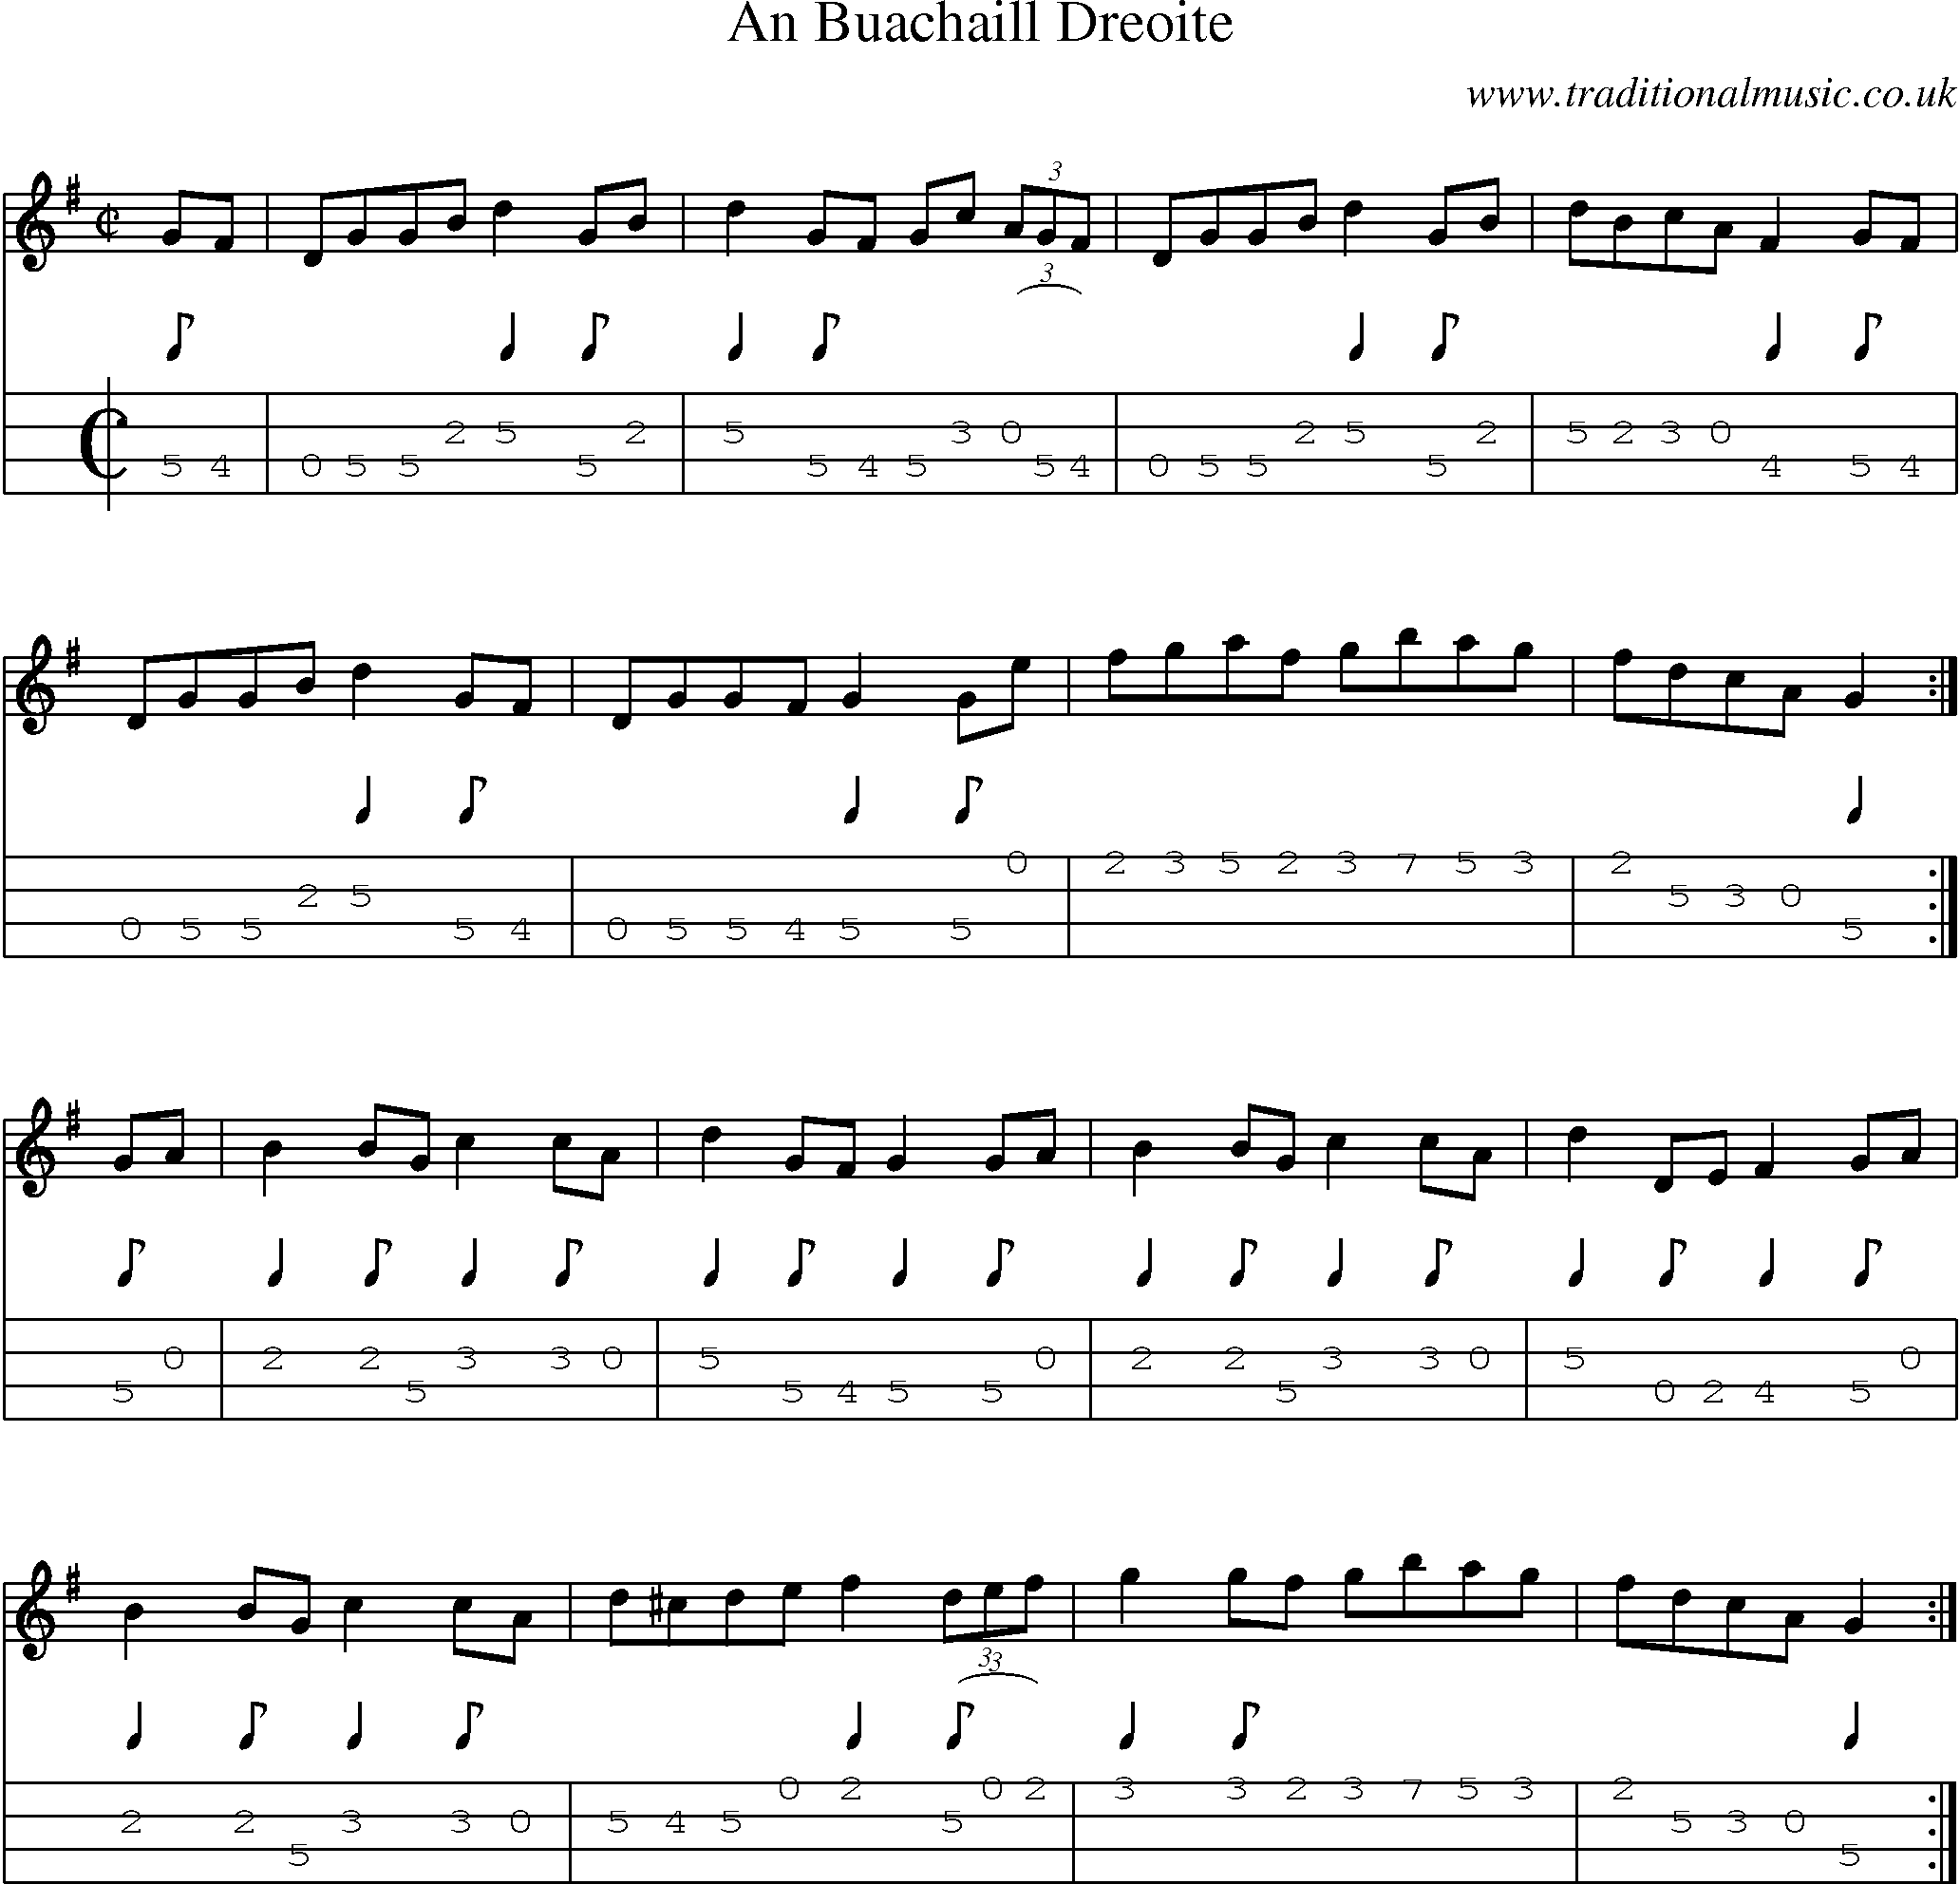 Music Score and Mandolin Tabs for An Buachaill Dreoite